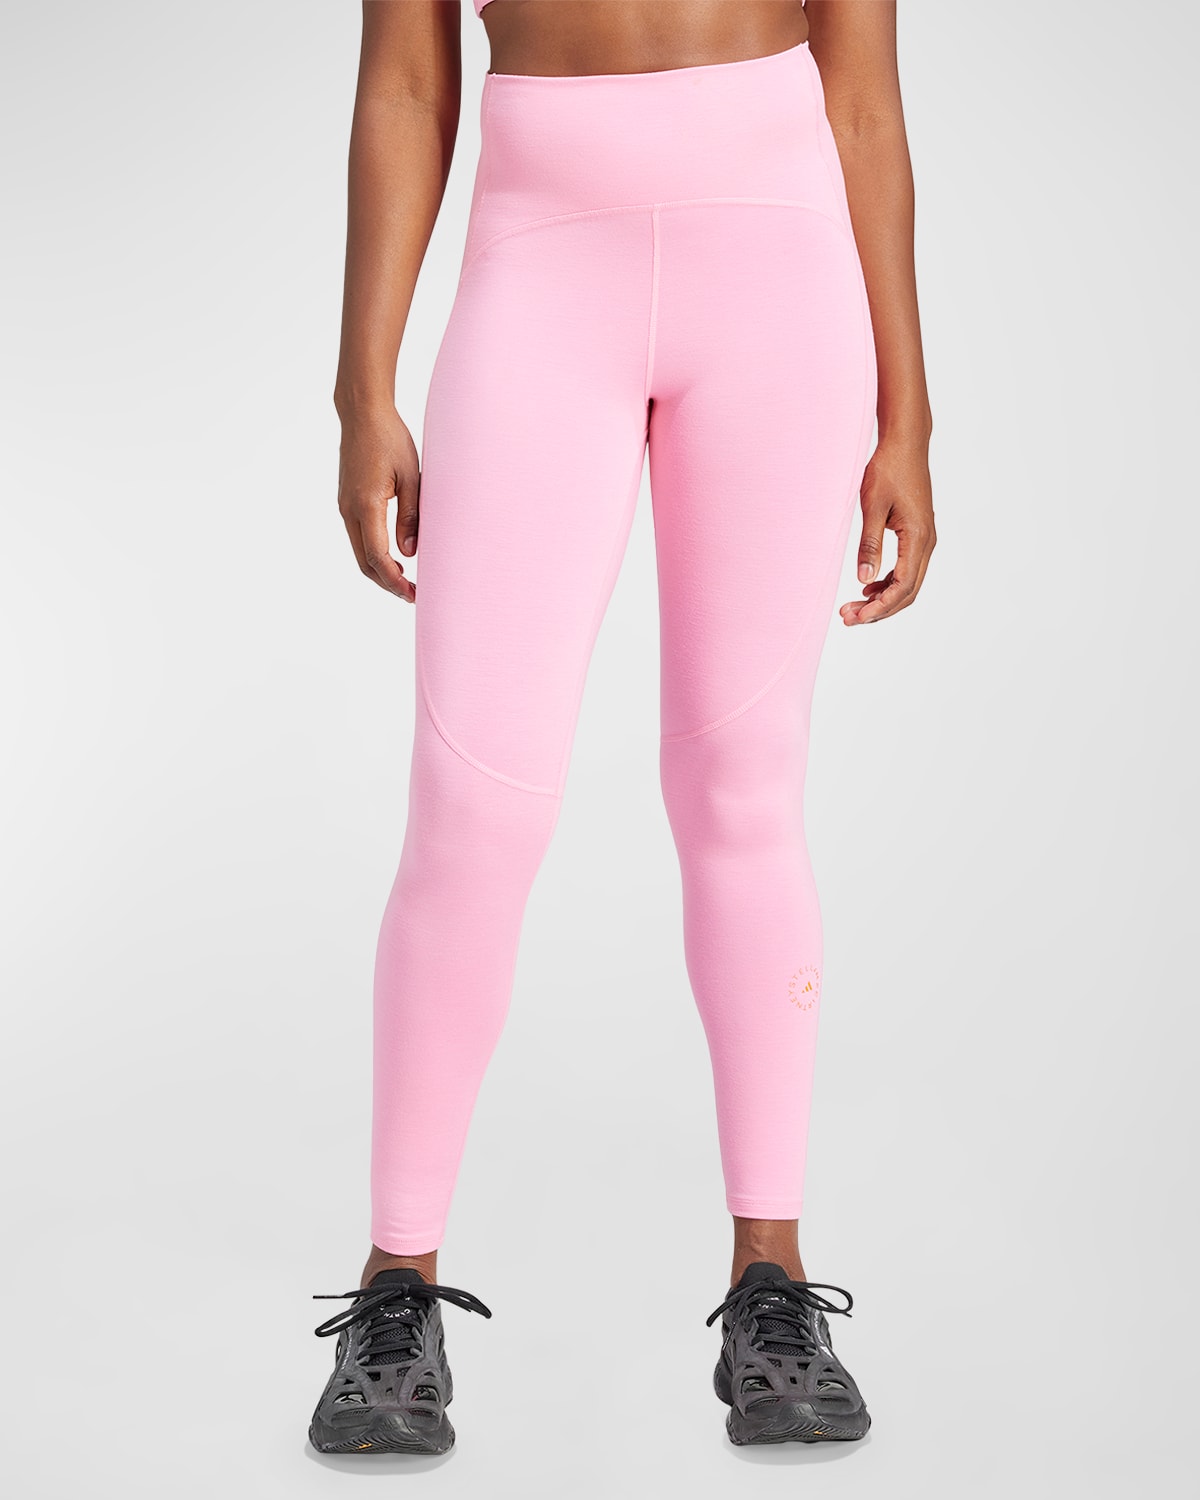 Adidas By Stella Mccartney Truestrength Yoga 7/8 Leggings In Semi Pink Glow